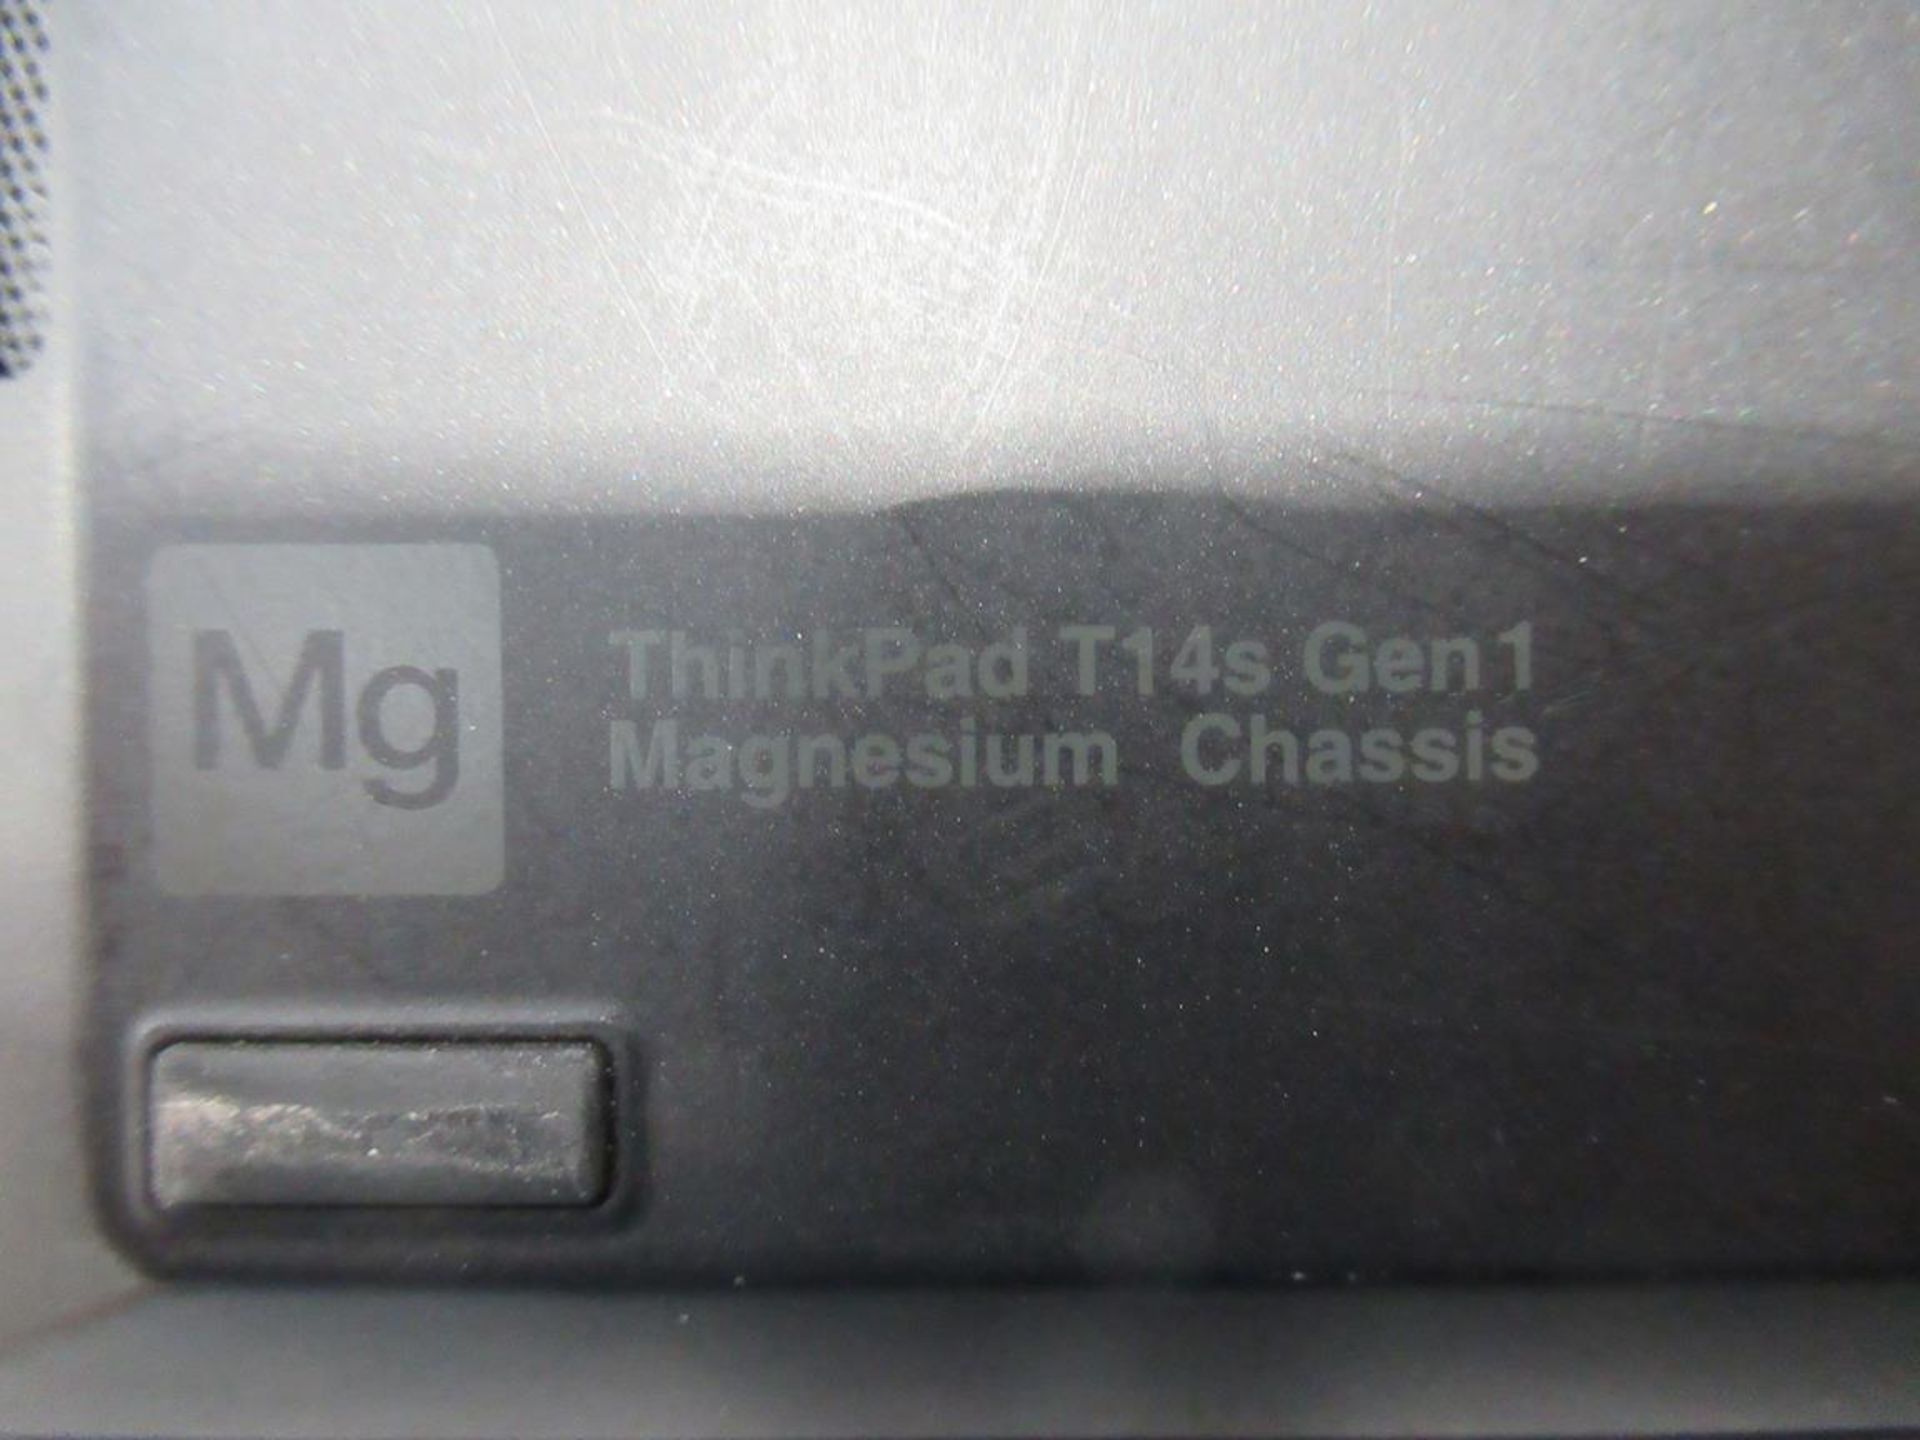 Thinkpad, T14s Gen 2 standard specification - Image 3 of 5